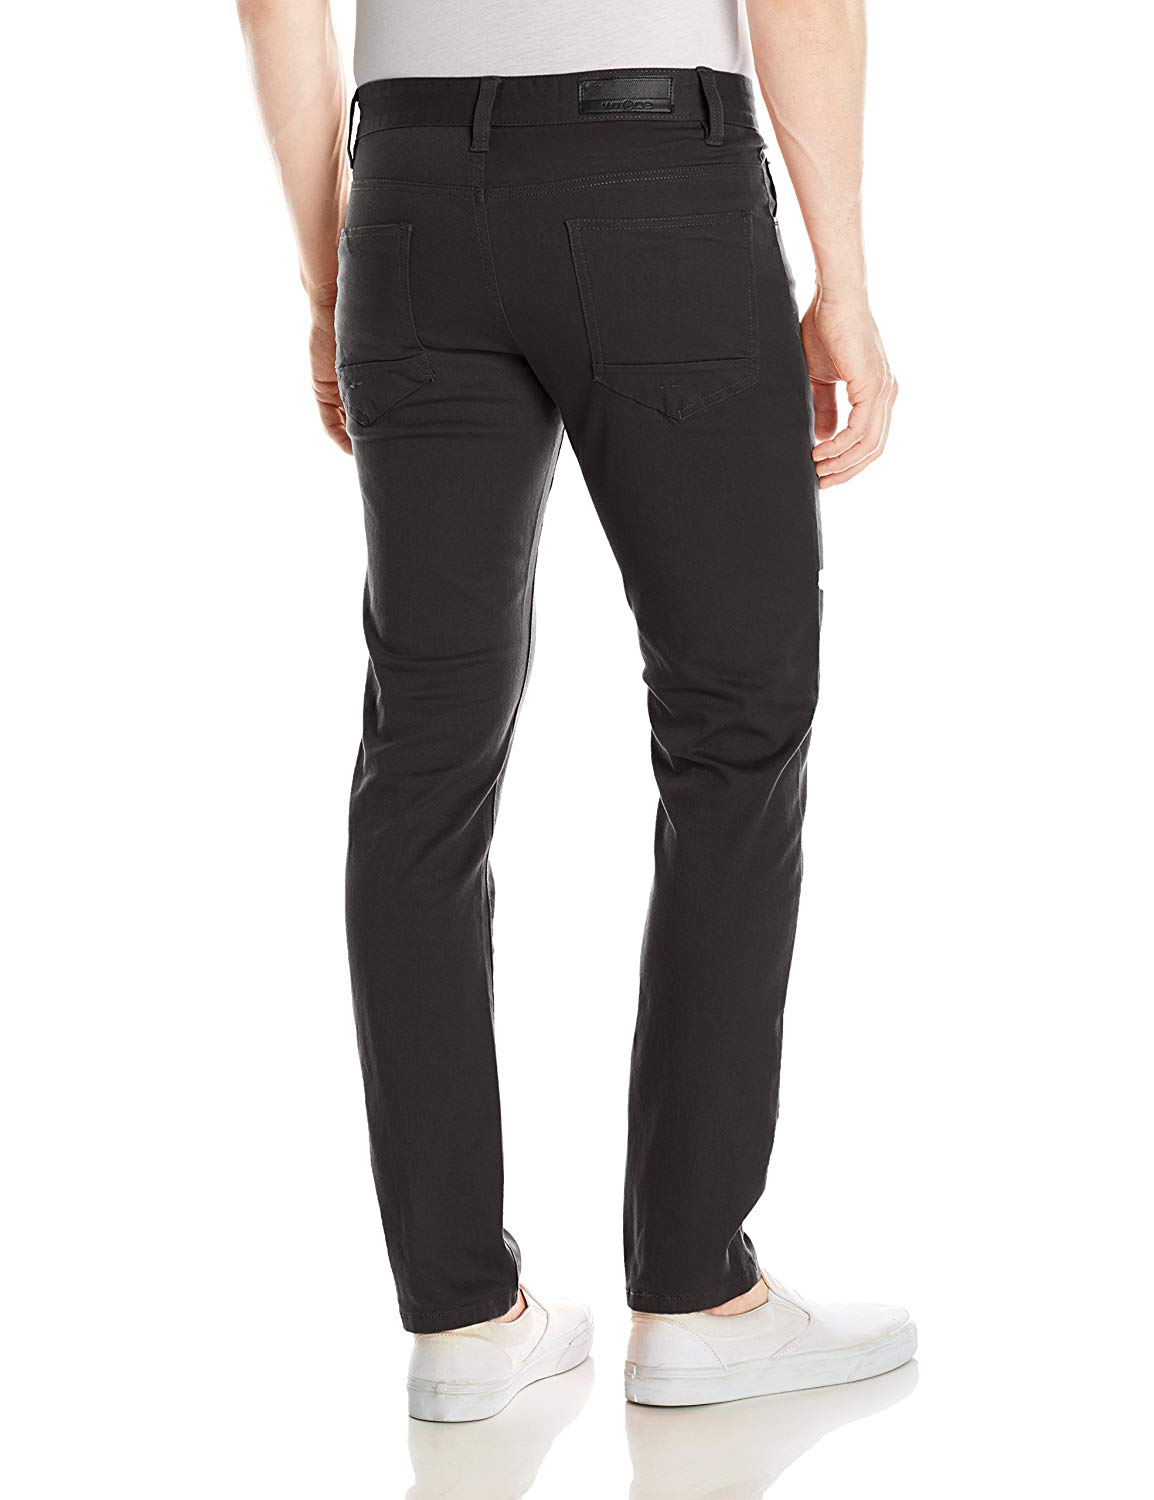 WT02 Men's Basic Color Twill Stretch Span Pants,, Black(new), Size 34W ...